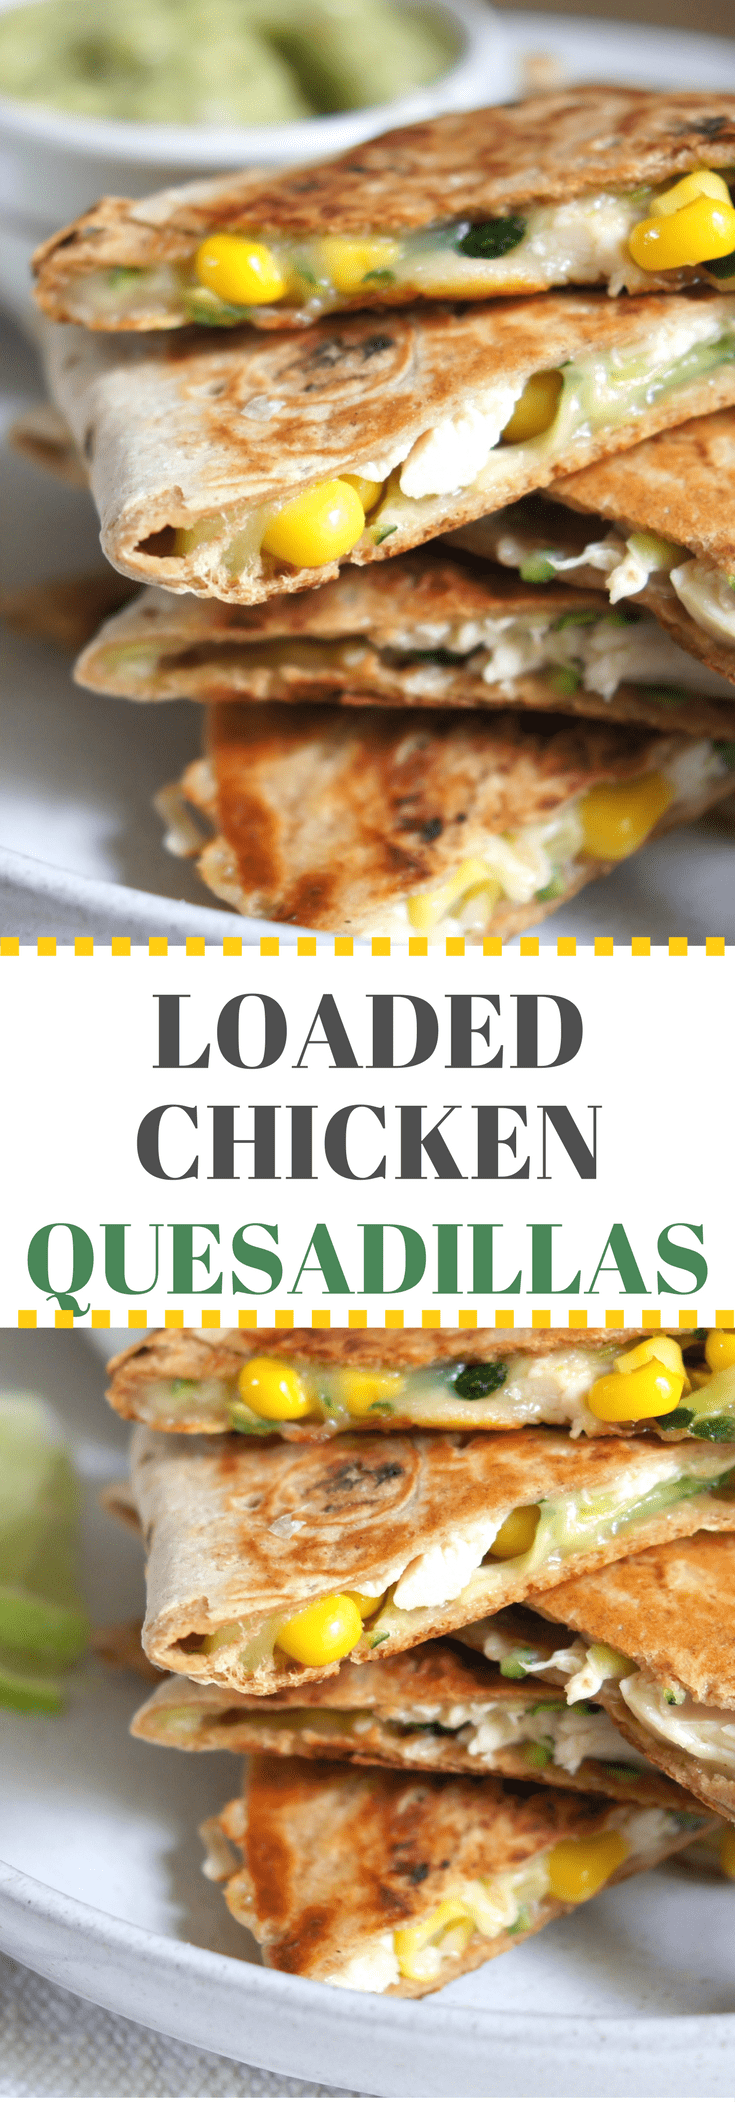 Healthy Loaded Chicken Quesadillas - Mom's Kitchen Handbook